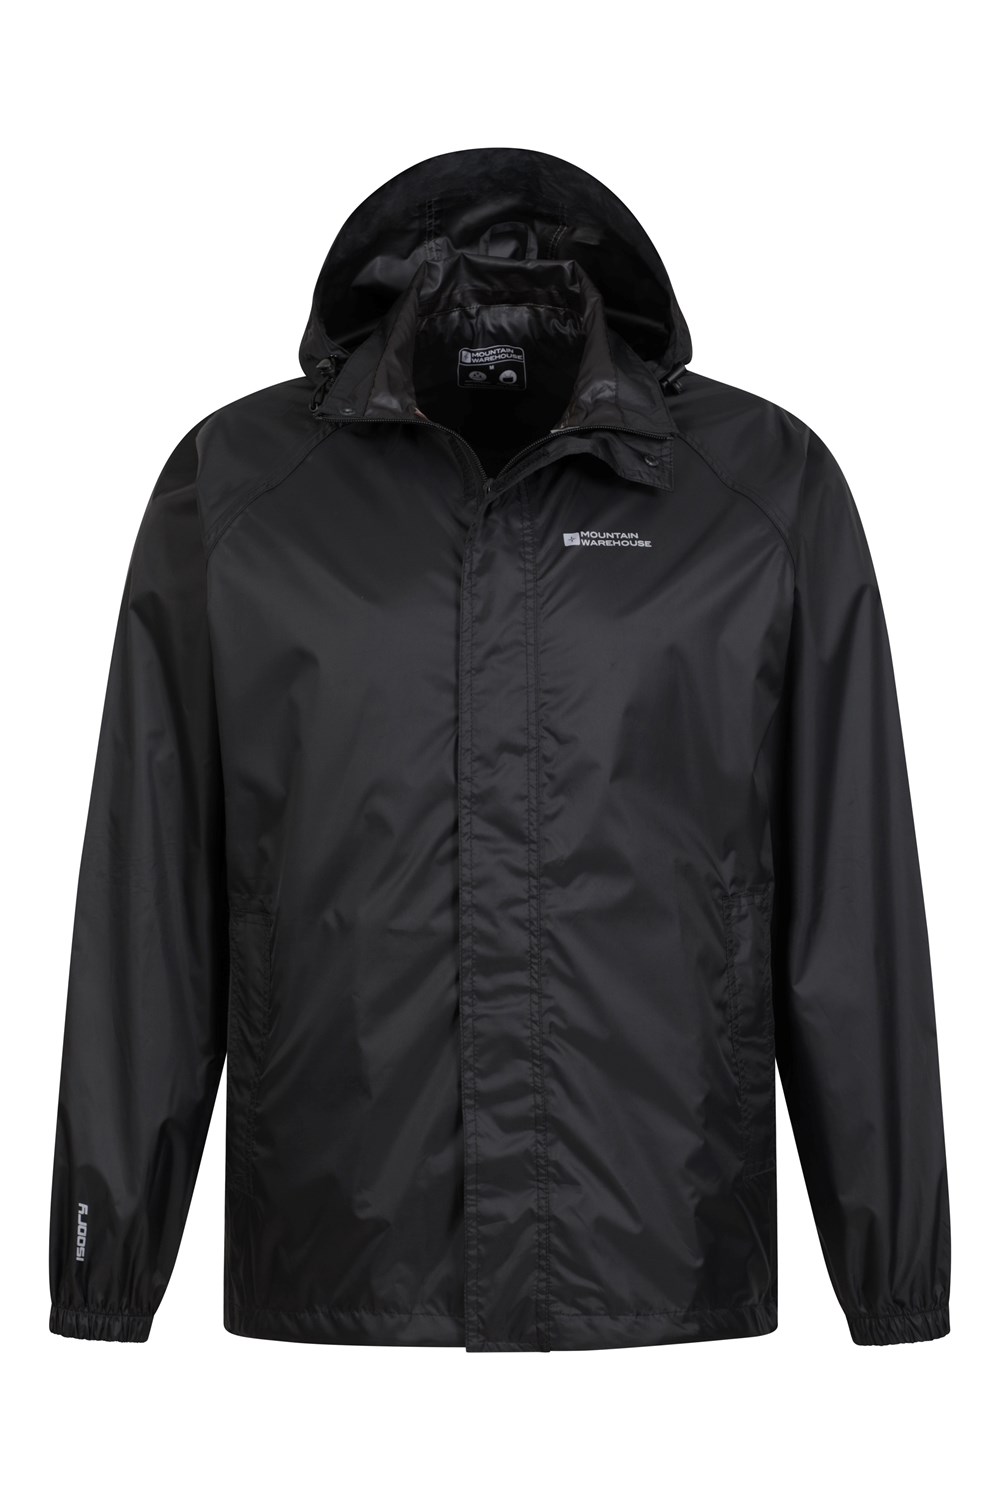 Mountain Warehouse Pakka Men's Waterproof Winter Jacket Hooded ...